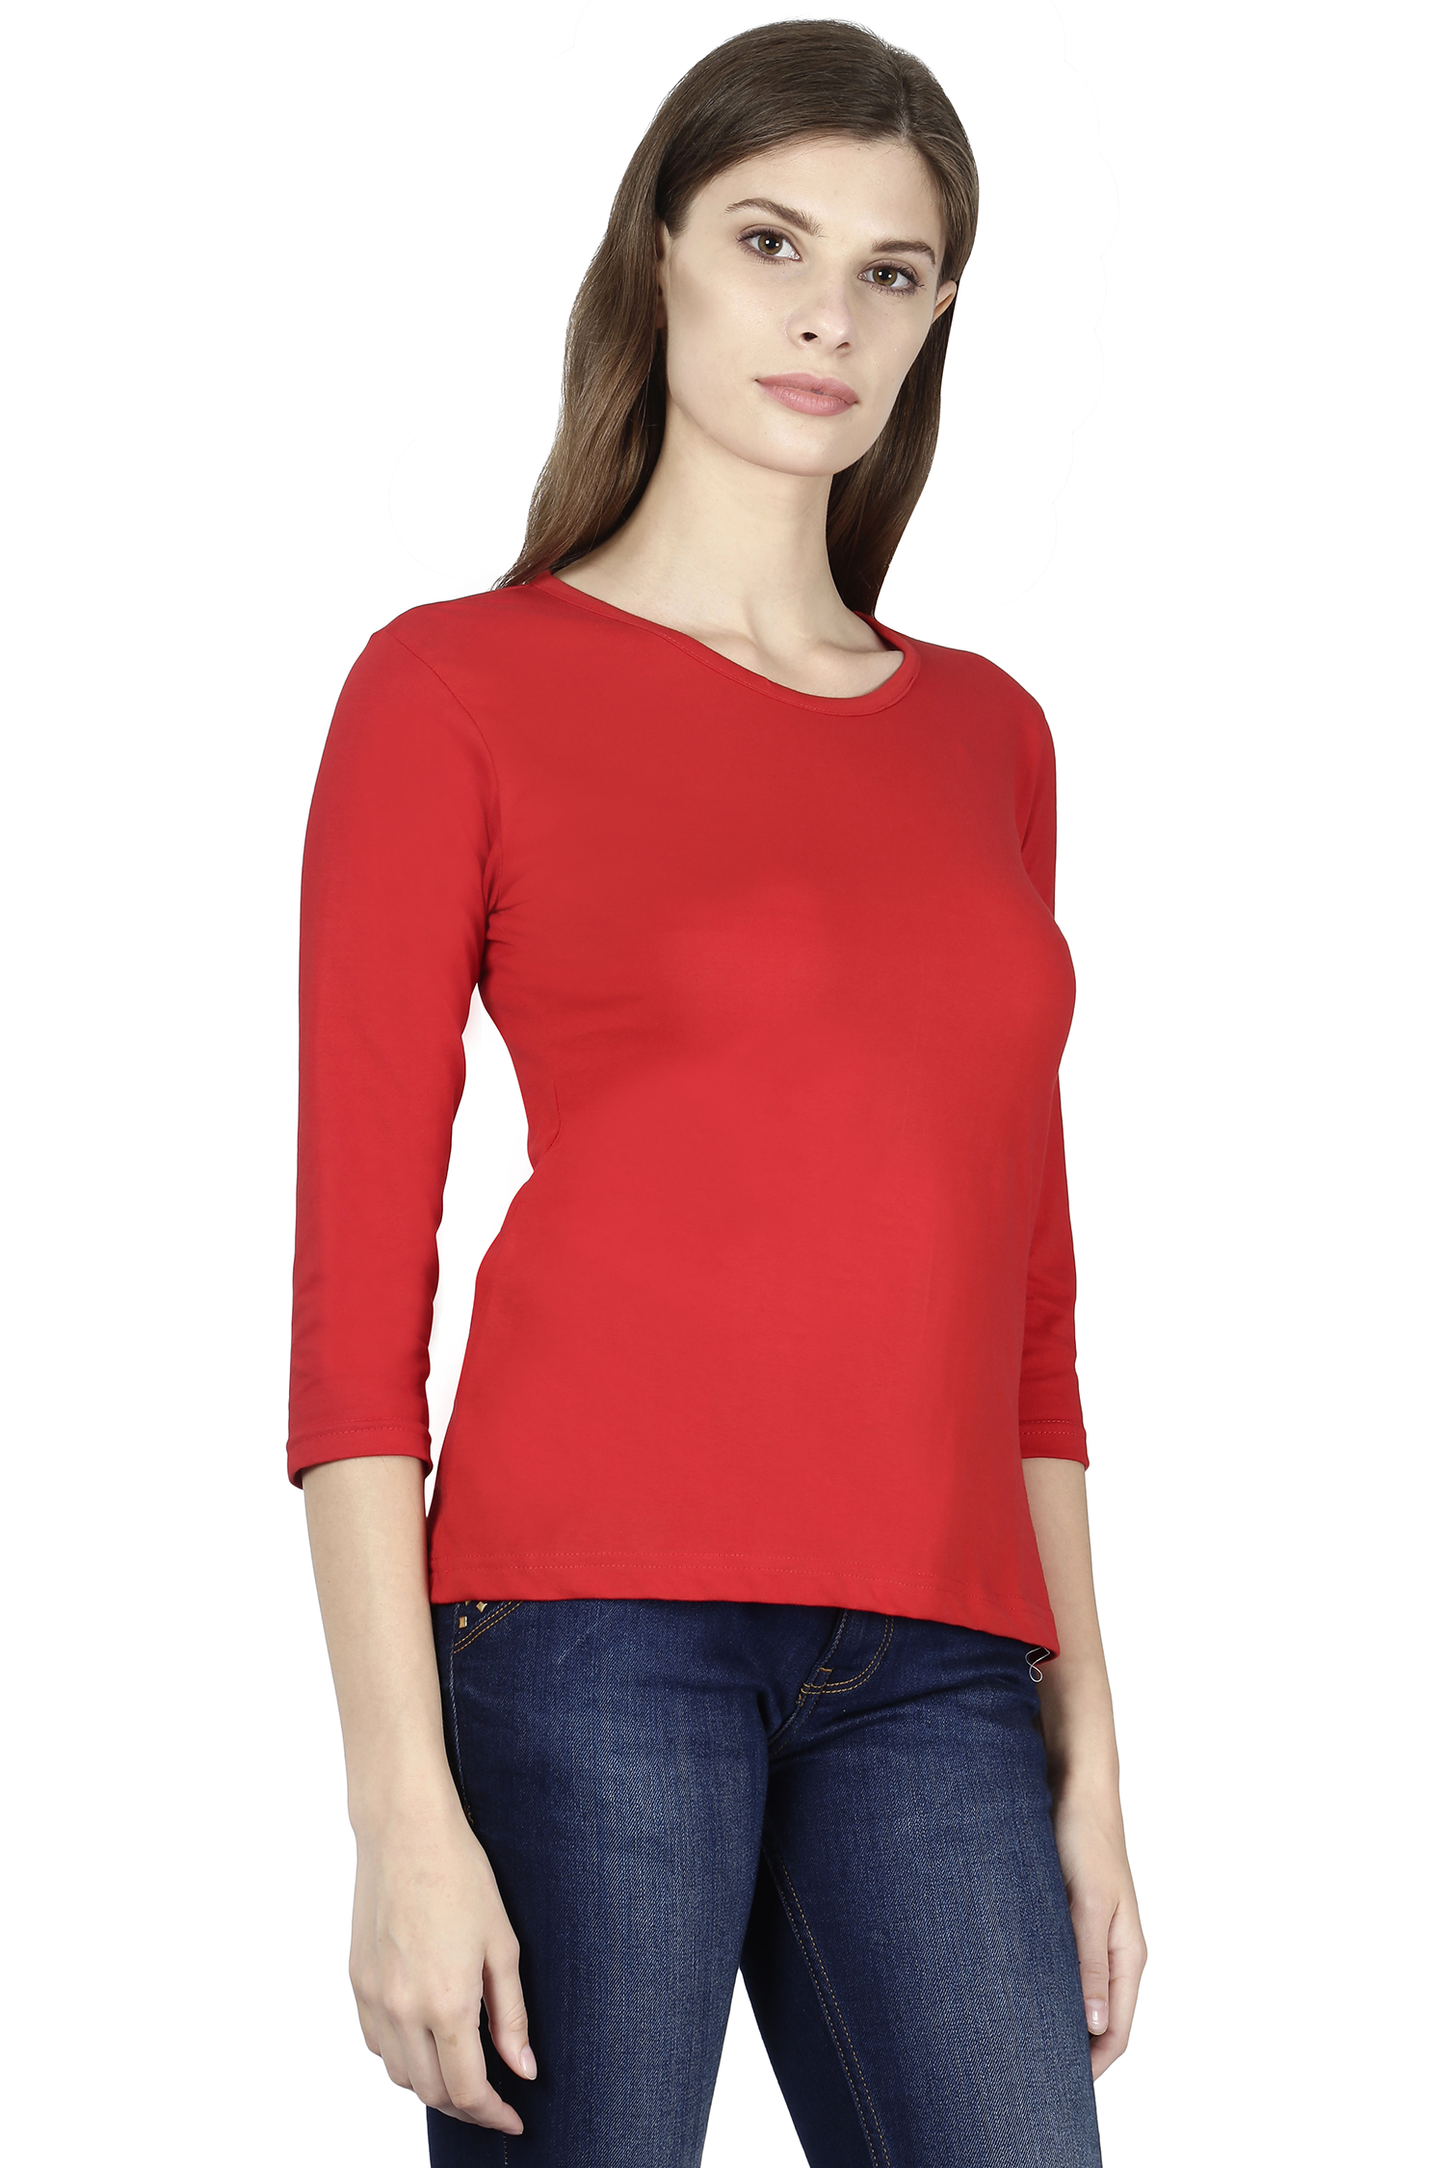 Plain Red | Women 3/4 Sleeve Round Neck T-Shirt